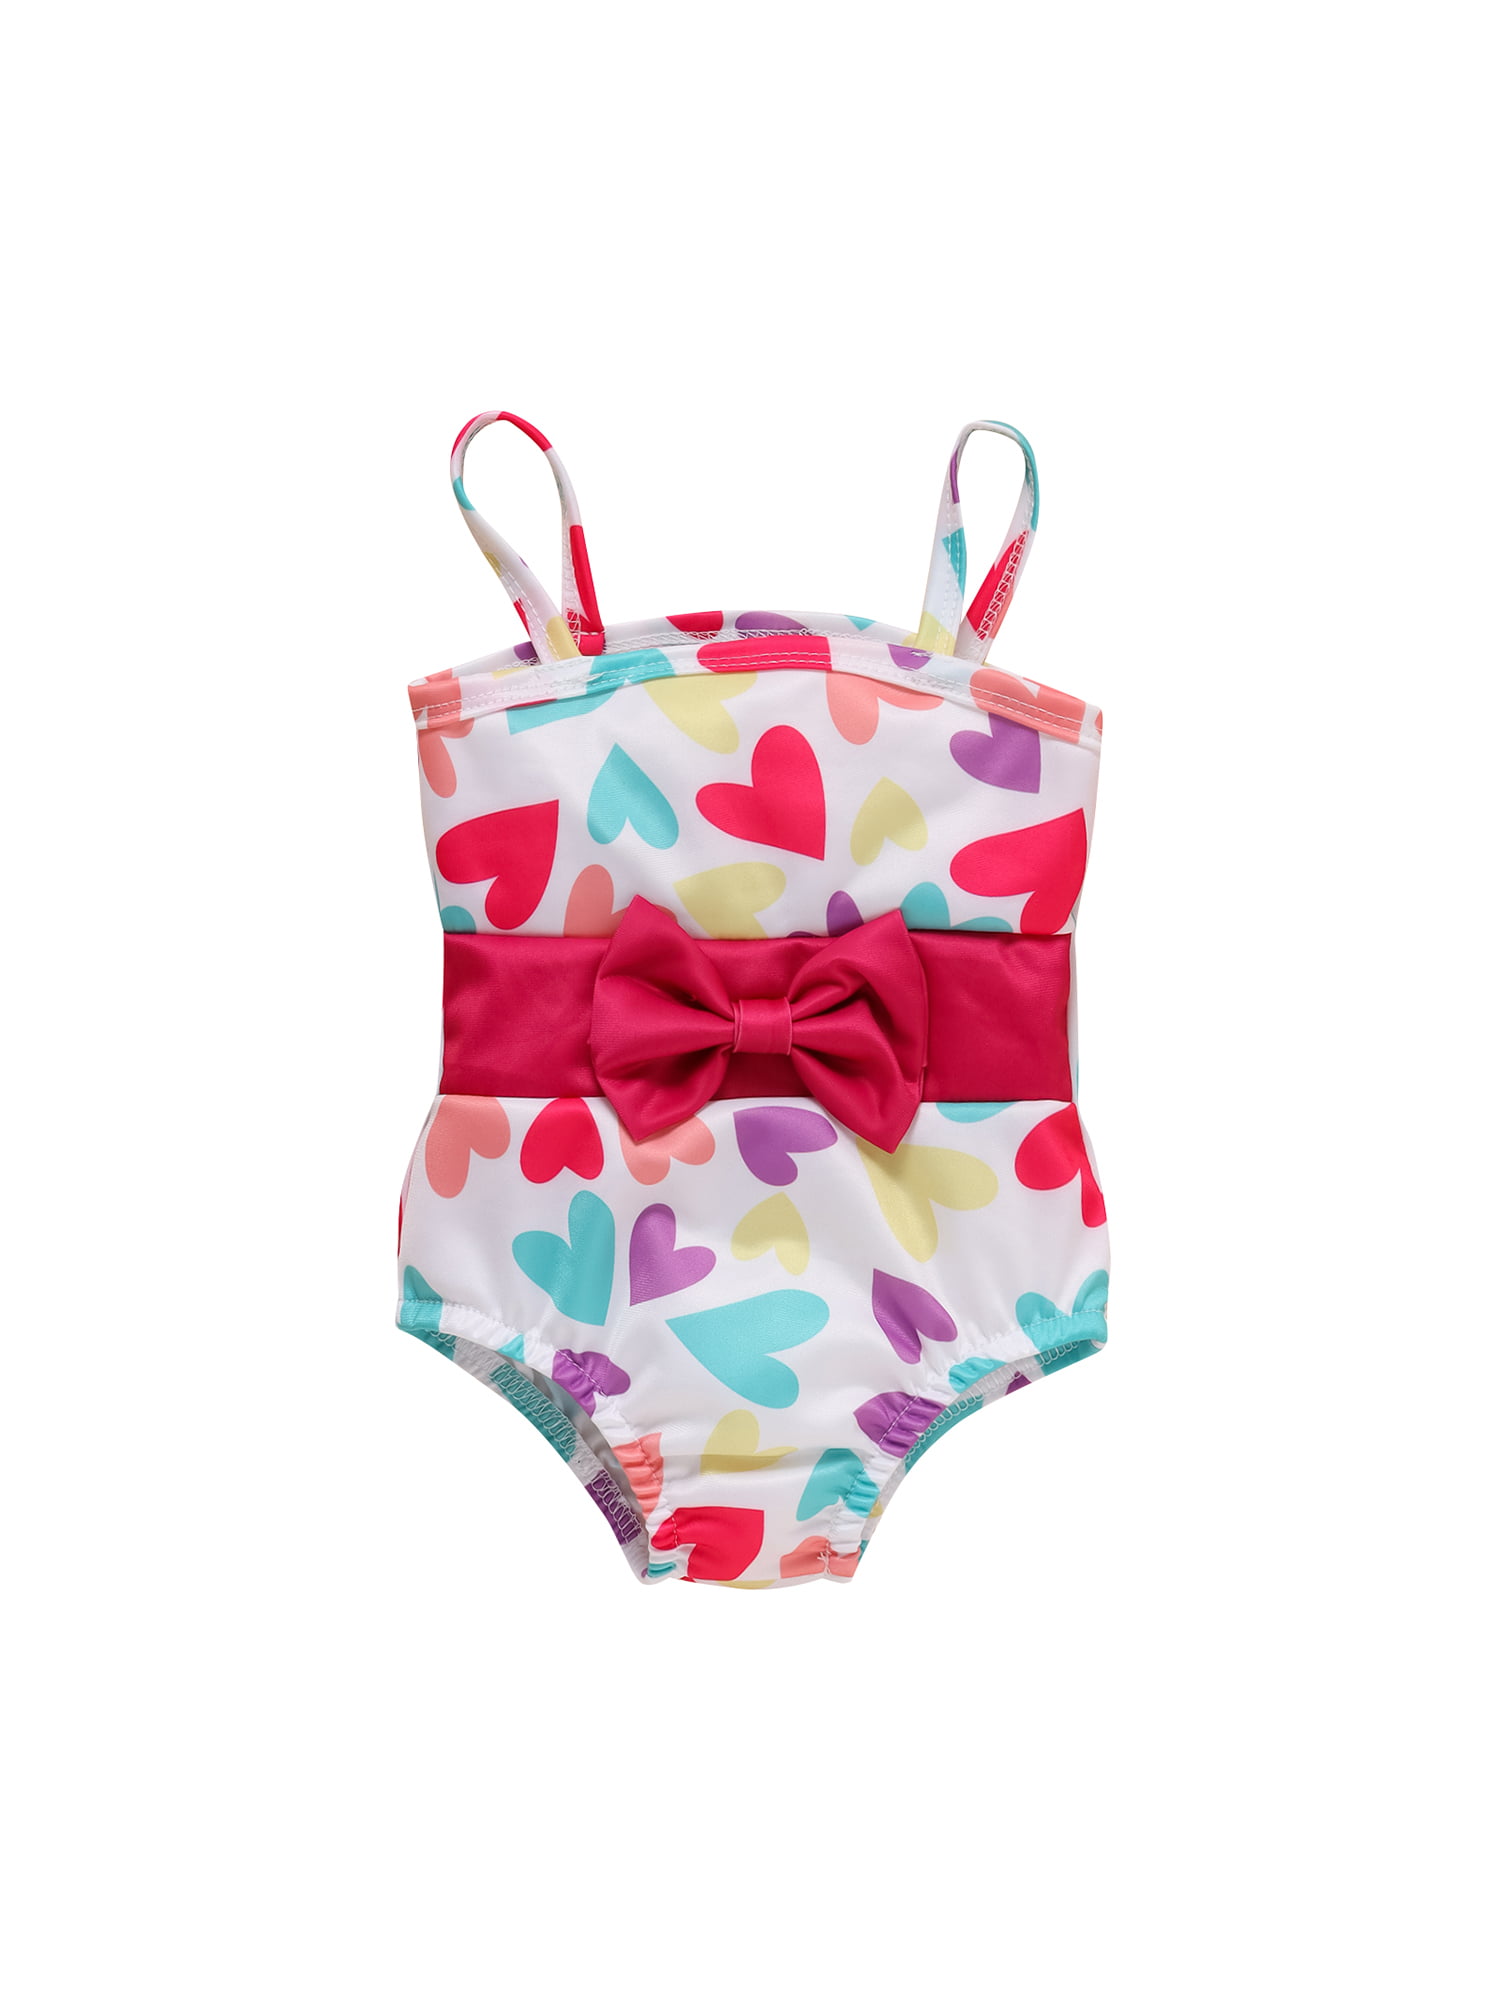 Qtinghua Newborn Infant Girls 3pcs Bikini Swimsuit Heart Print Tie Up Tops+Ruffled Shorts+Hat Swimwear Beachwear 